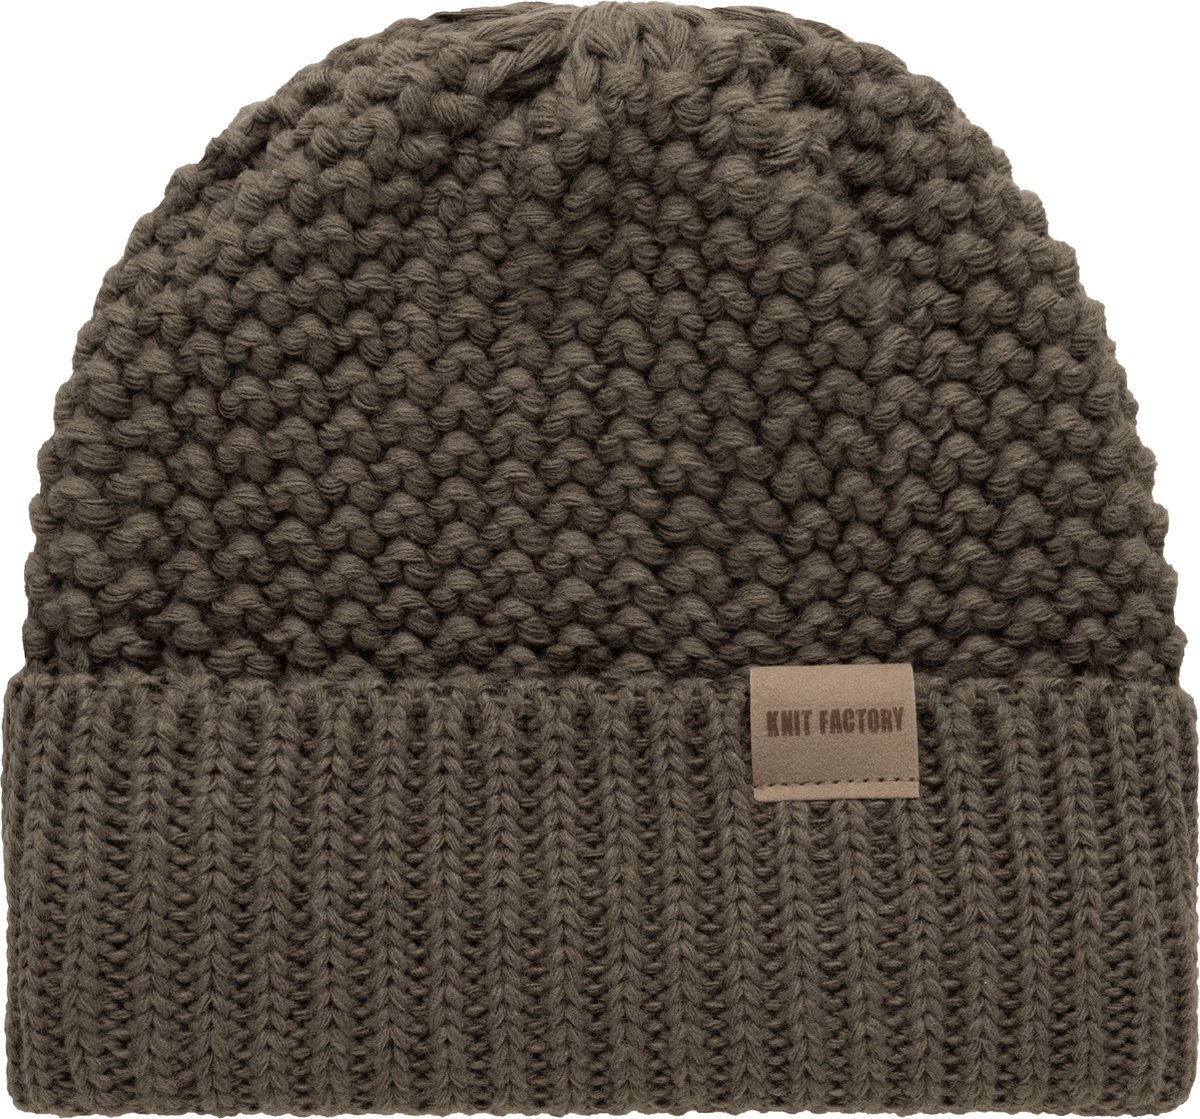 Knit Factory Carry Gebreide Muts Heren & Dames - Beanie hat - Cappuccino - Grofgebreid - Warme bruin Wintermuts - Unisex - One Size